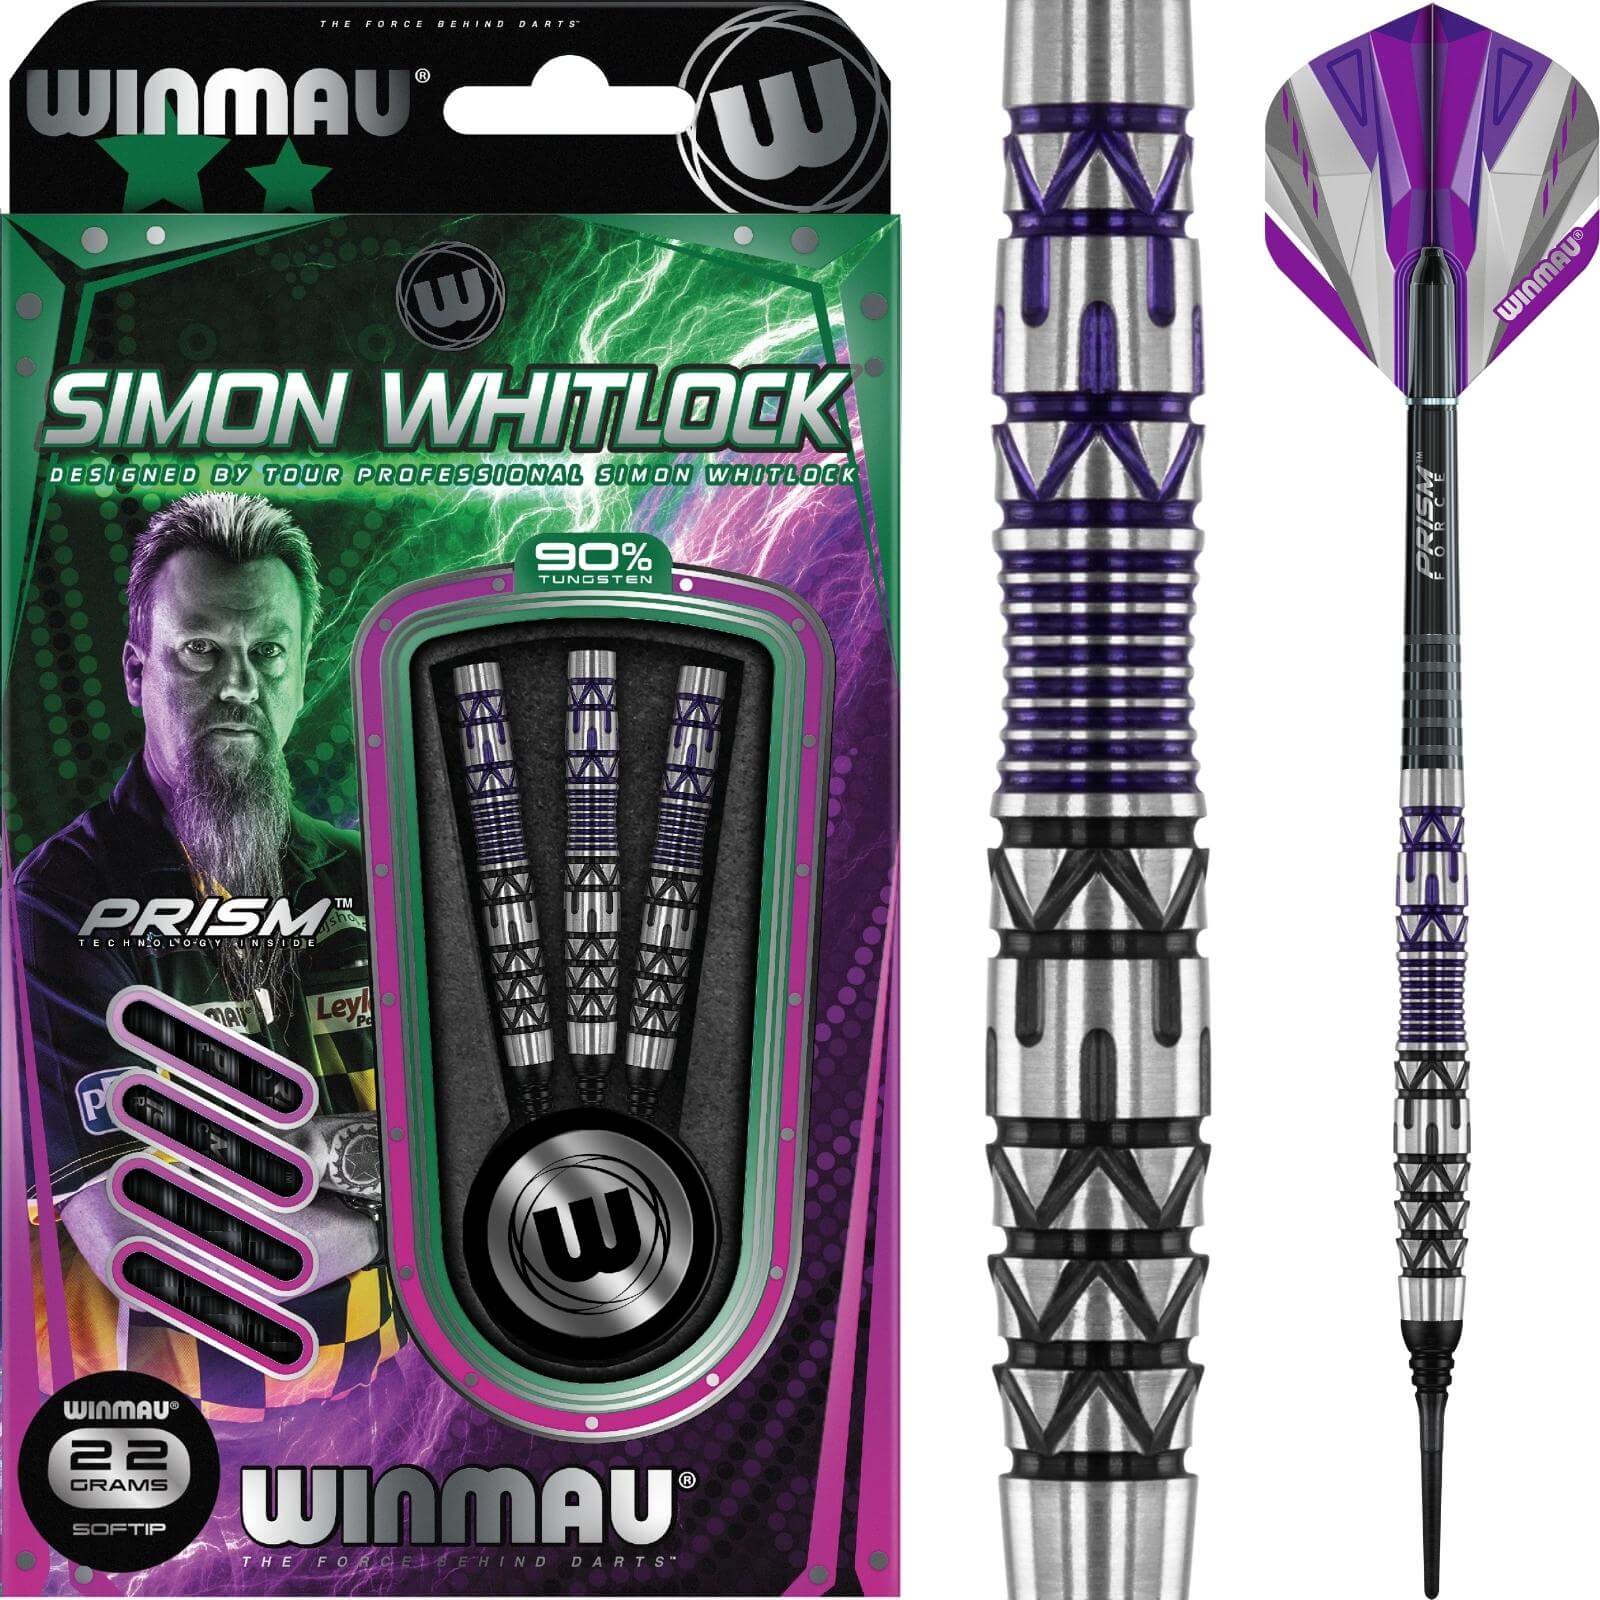 Darts - Winmau - Simon Whitlock Special Edition Darts - Soft Tip - 90% Tungsten - 22g 